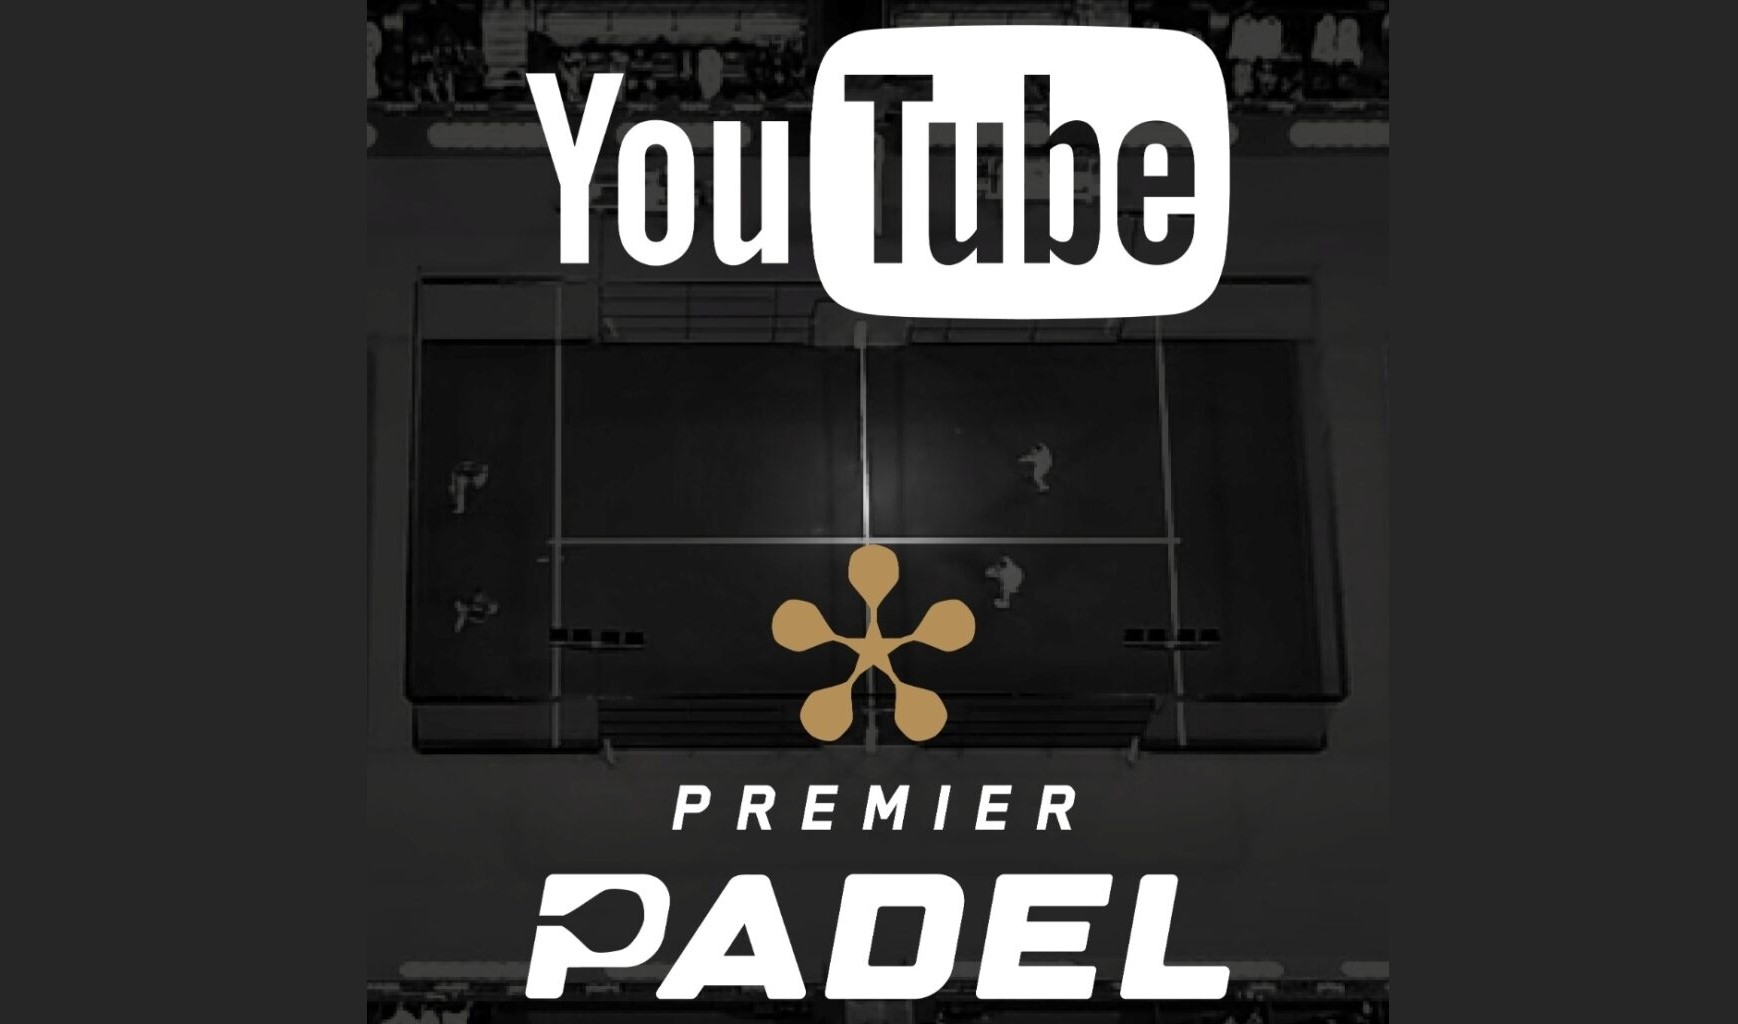 Premier Padel 在西班牙的 Youtube 上播出